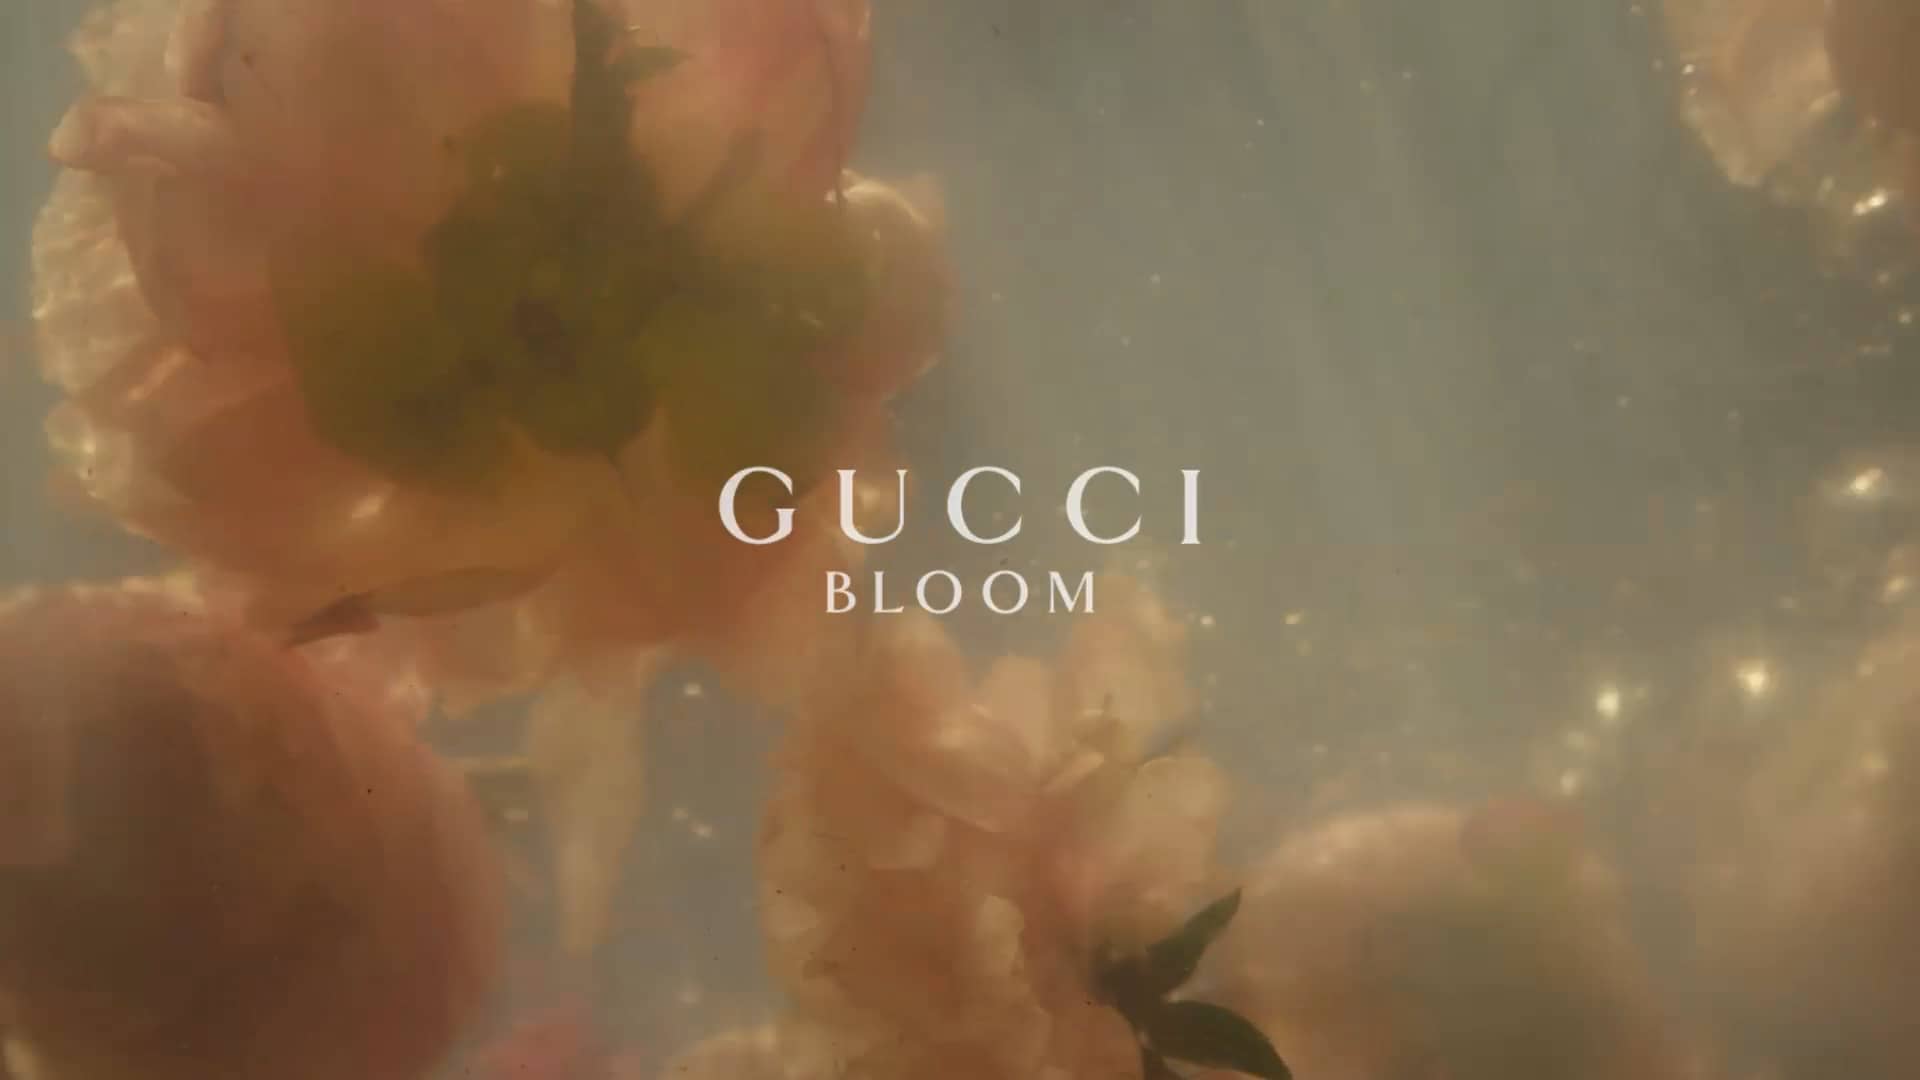 GUCCI - Bloom 2017 on Vimeo